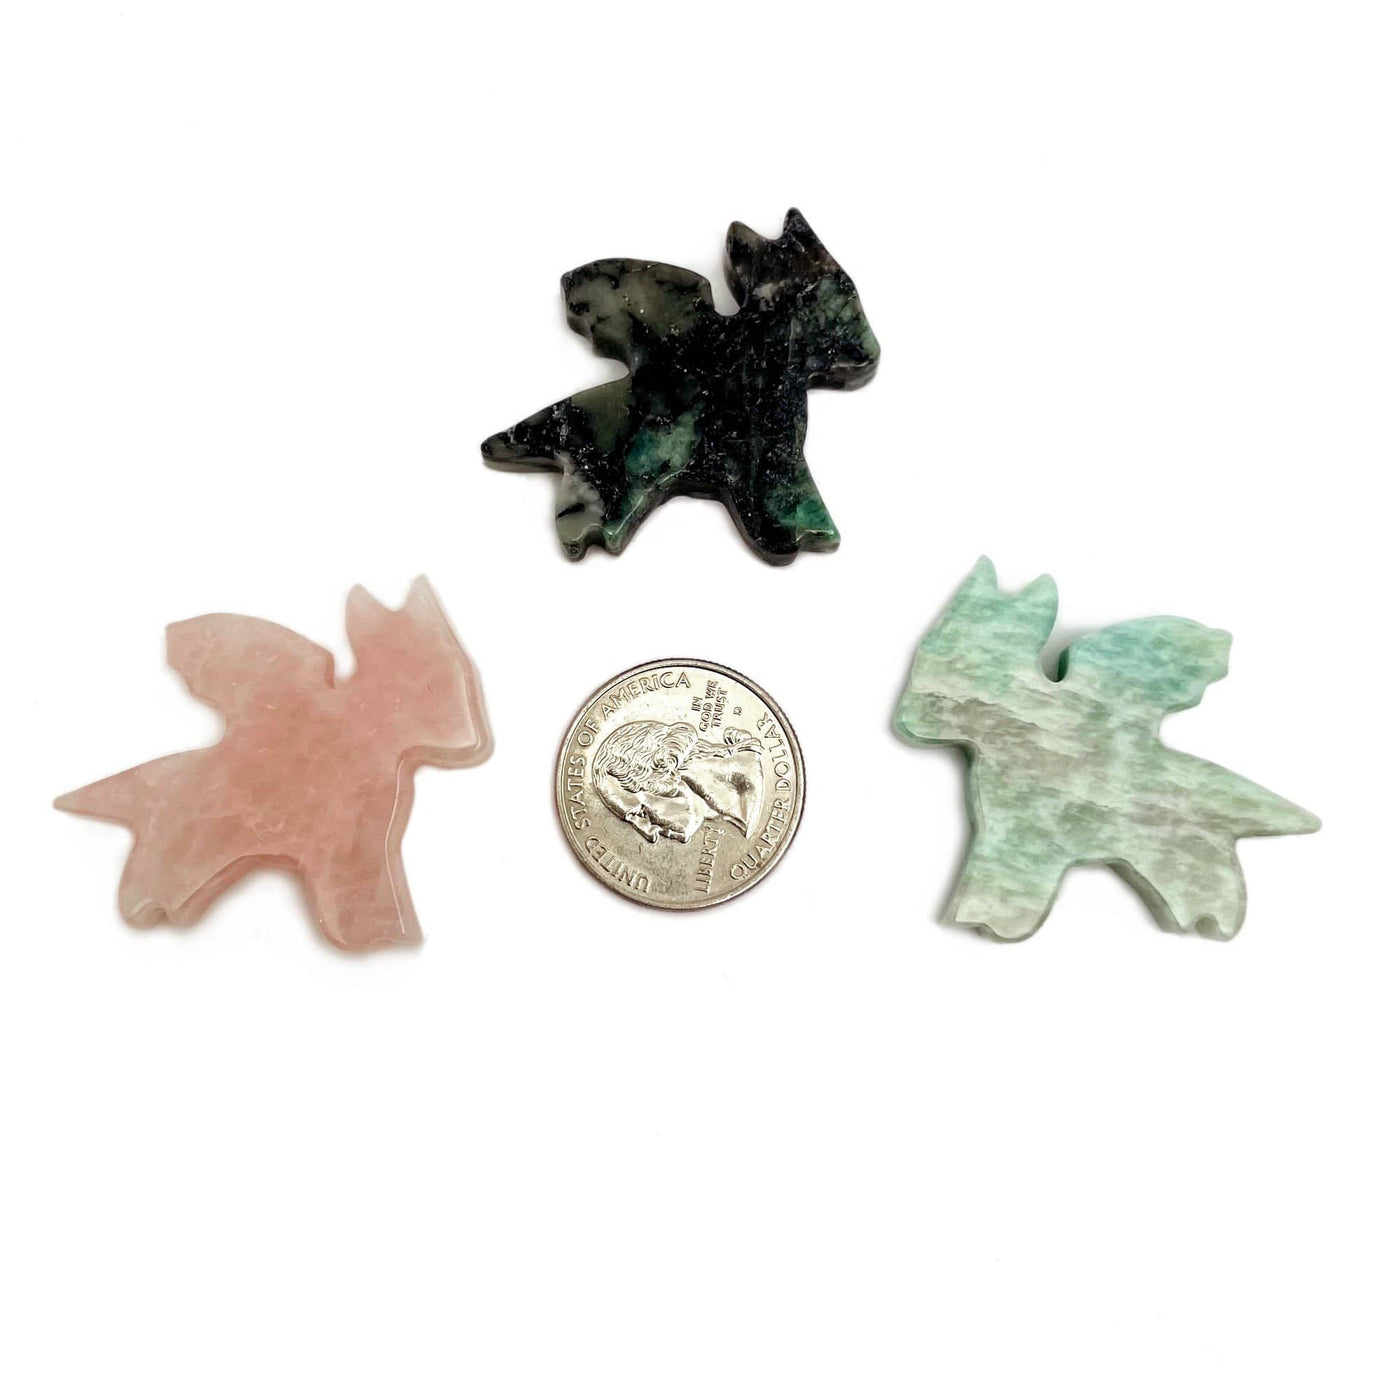 rose quartz emerald amazonite dragons next to quarter for size reference